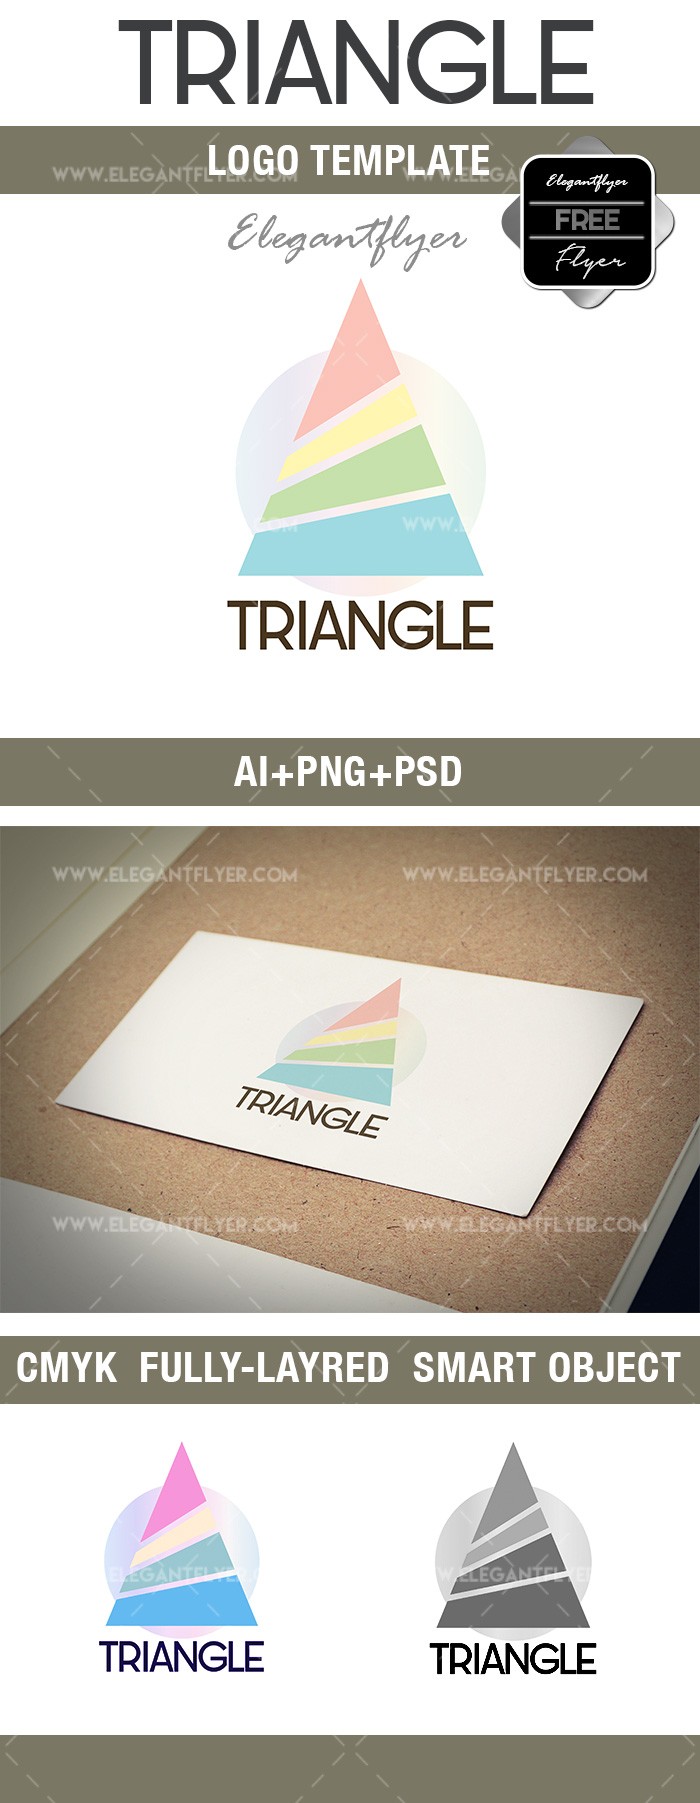 Triángulo by ElegantFlyer